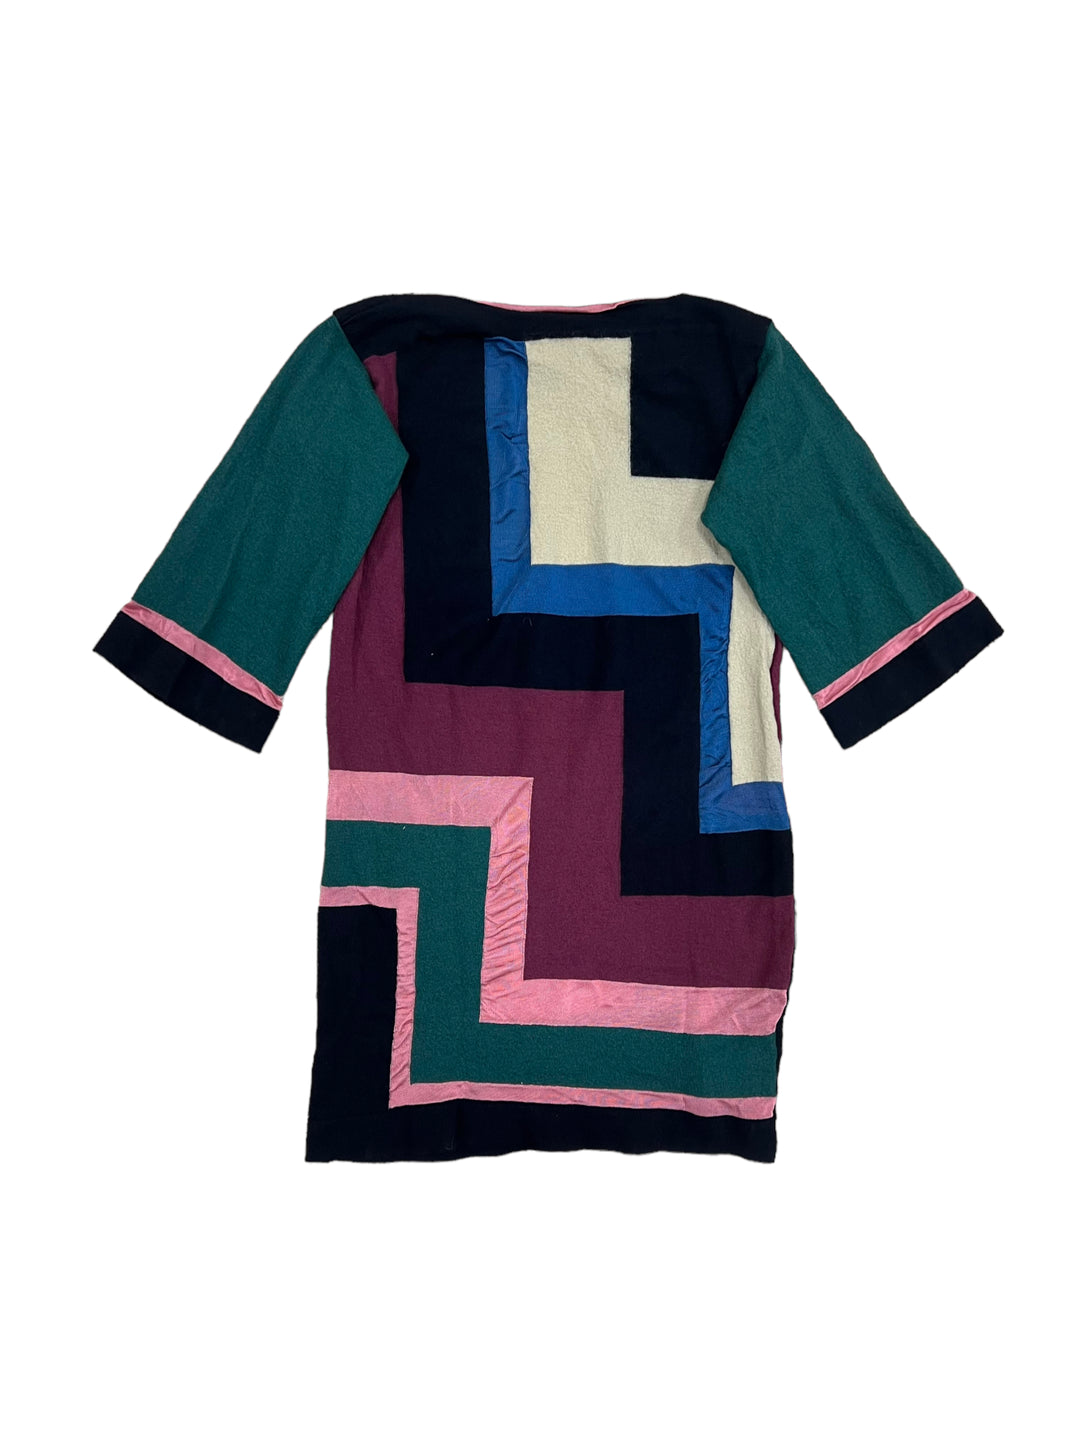 Missoni Vintage Sweater Mini Dress Women’s Medium